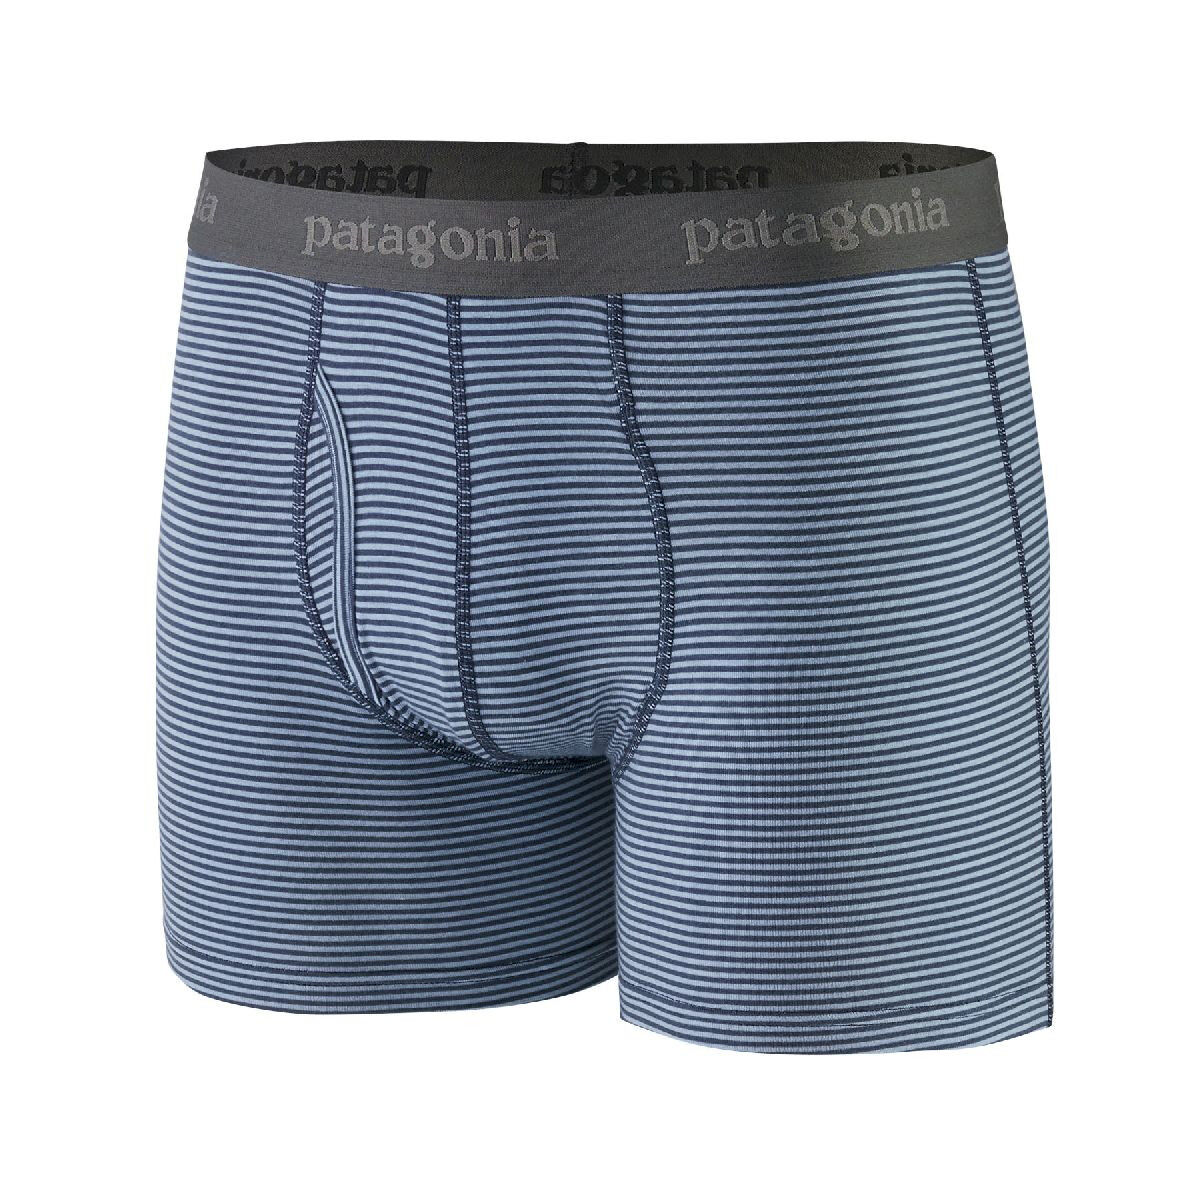 Patagonia - Essential Boxer Briefs - 3" - Ropa interior - Hombre